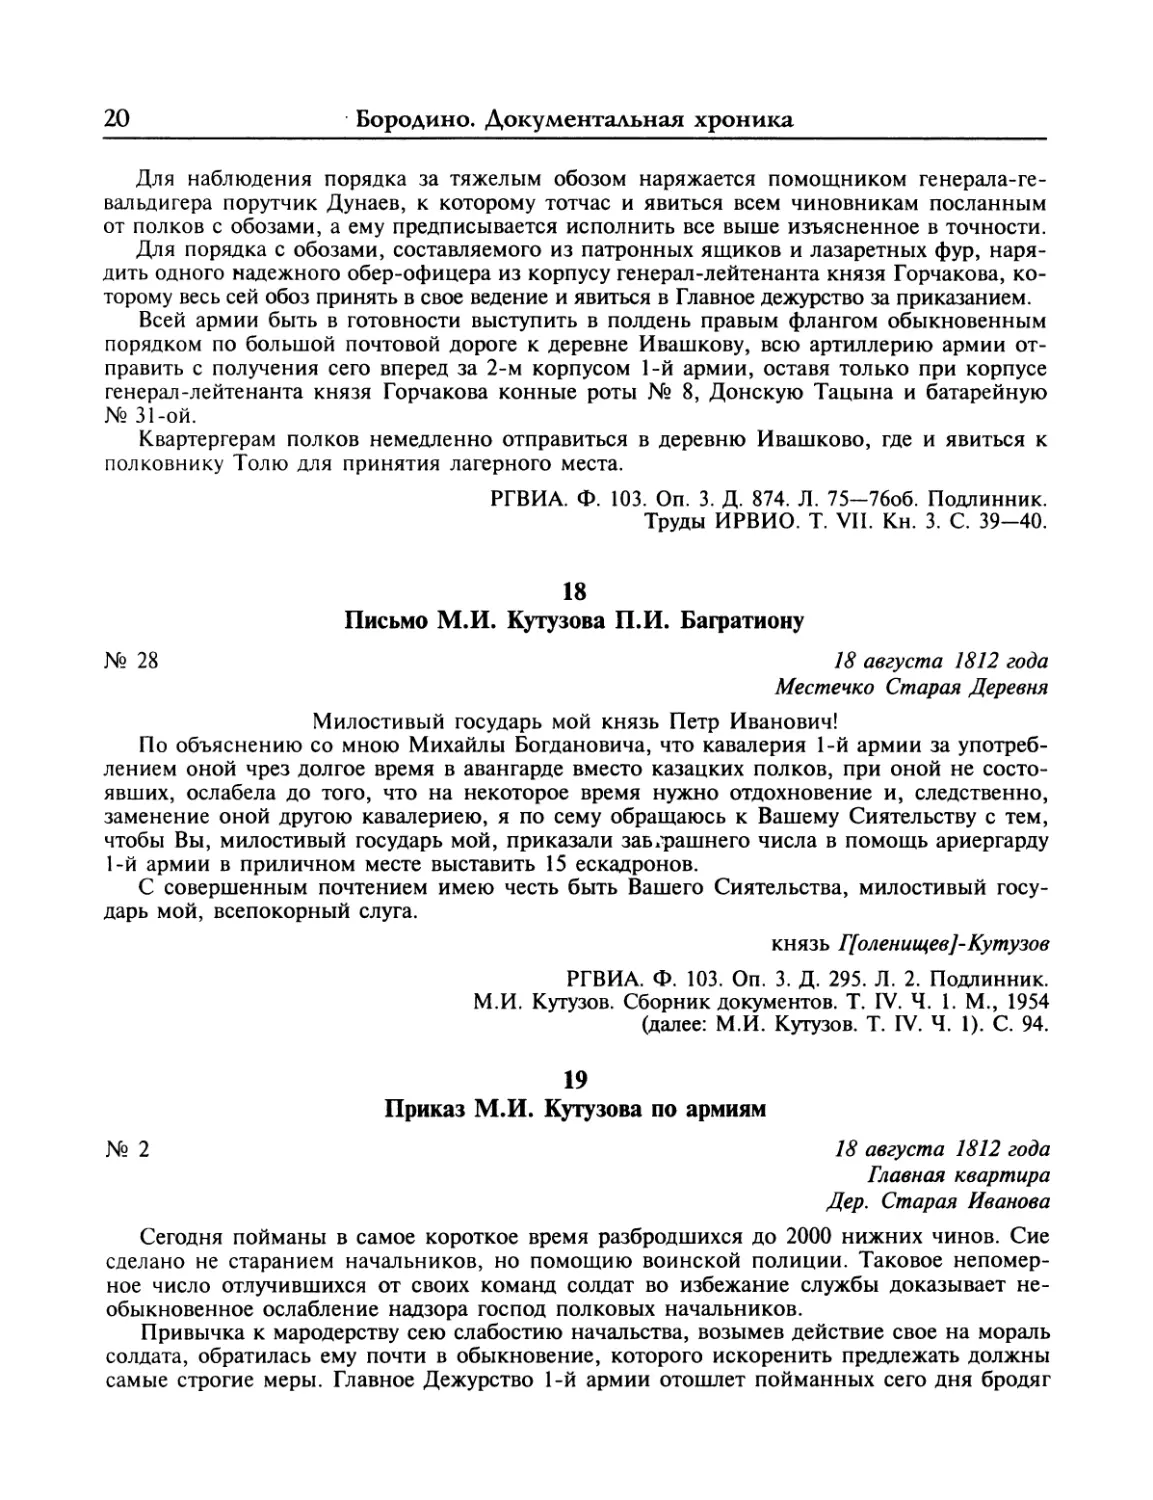 Письмо М.И.Кутузова П.И.Багратиону
Приказ М.И.Кутузова по армиям